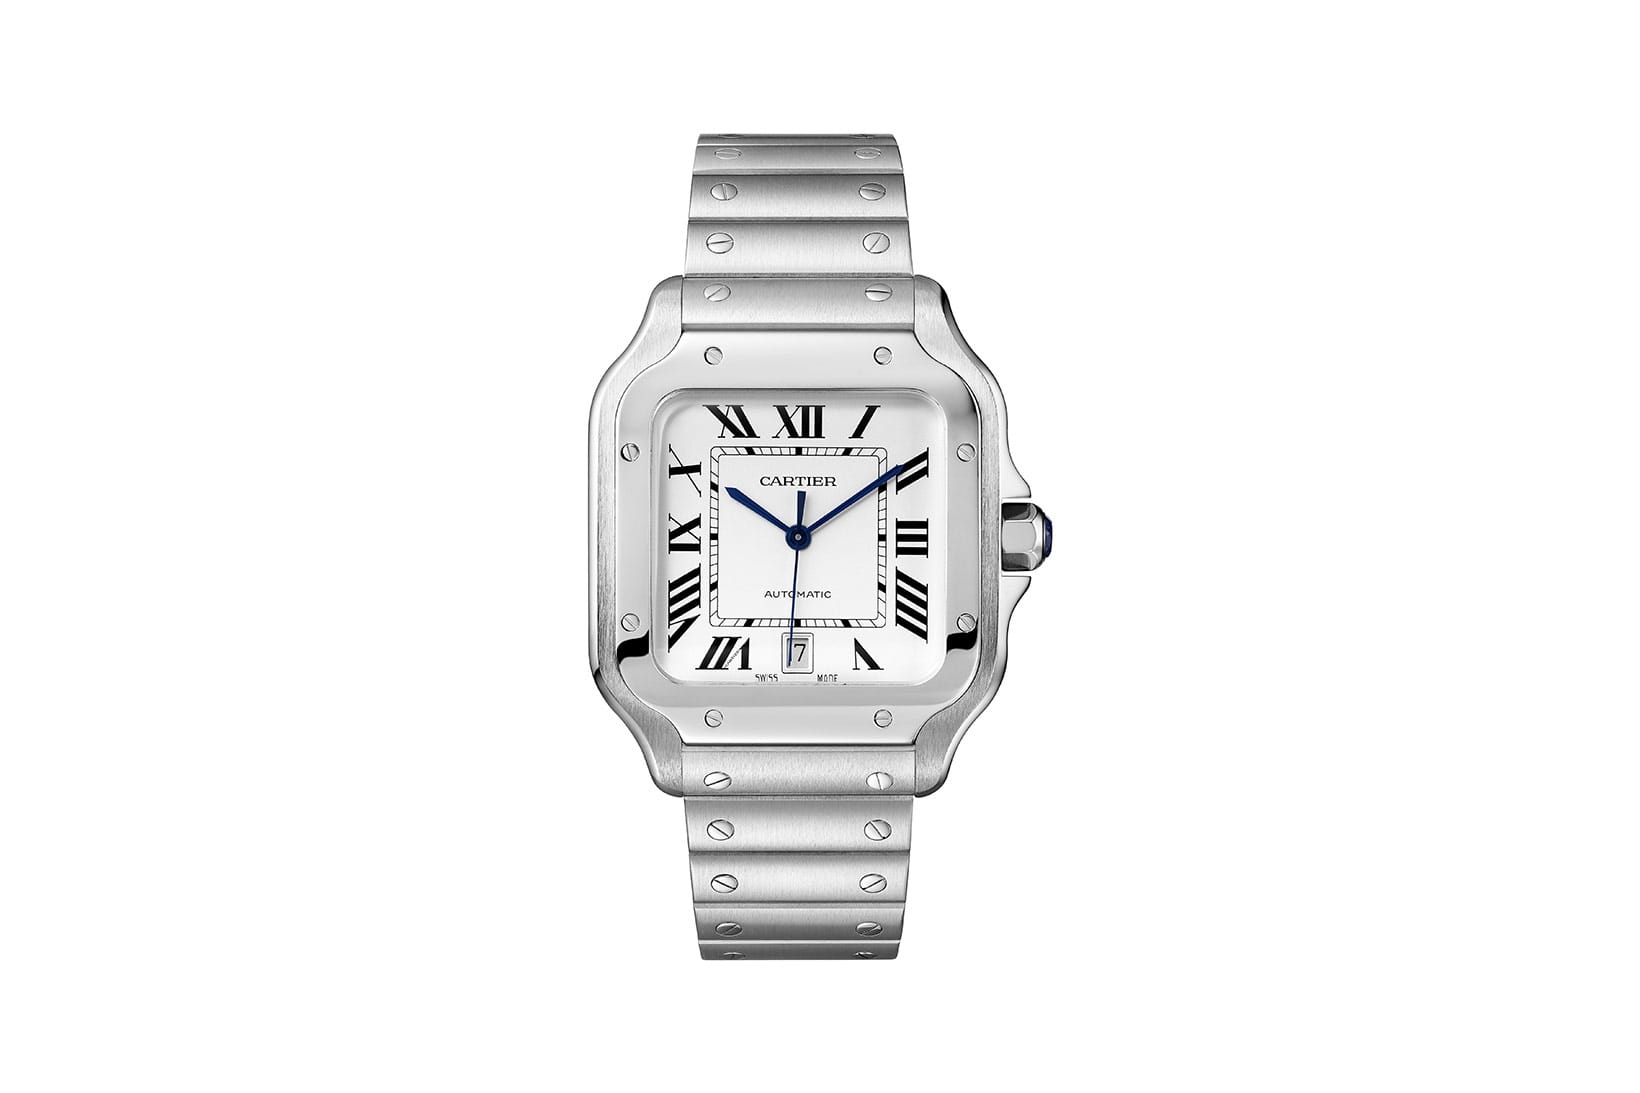 Santos de Cartier Wristwatch Campaign 